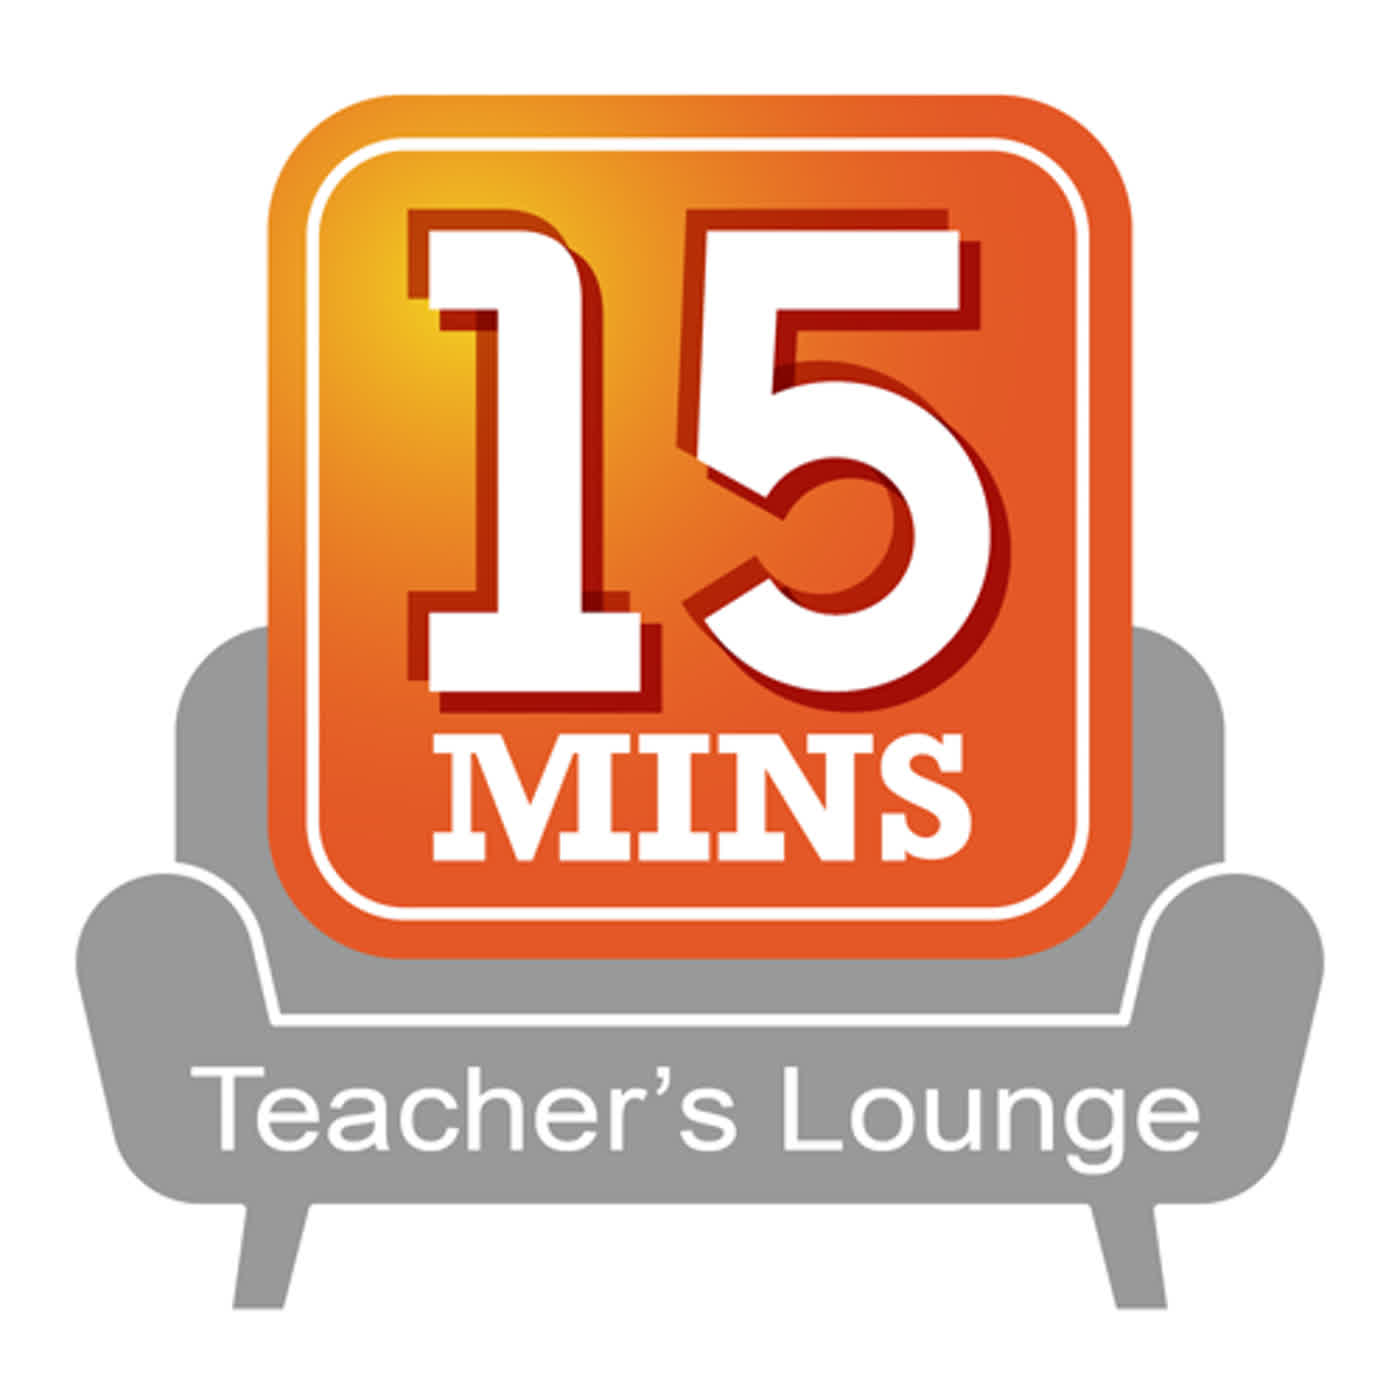 幕後教師室Teacher's Lounge Ep.26: 今年的成長就是從小改變開始 Change starts from small places